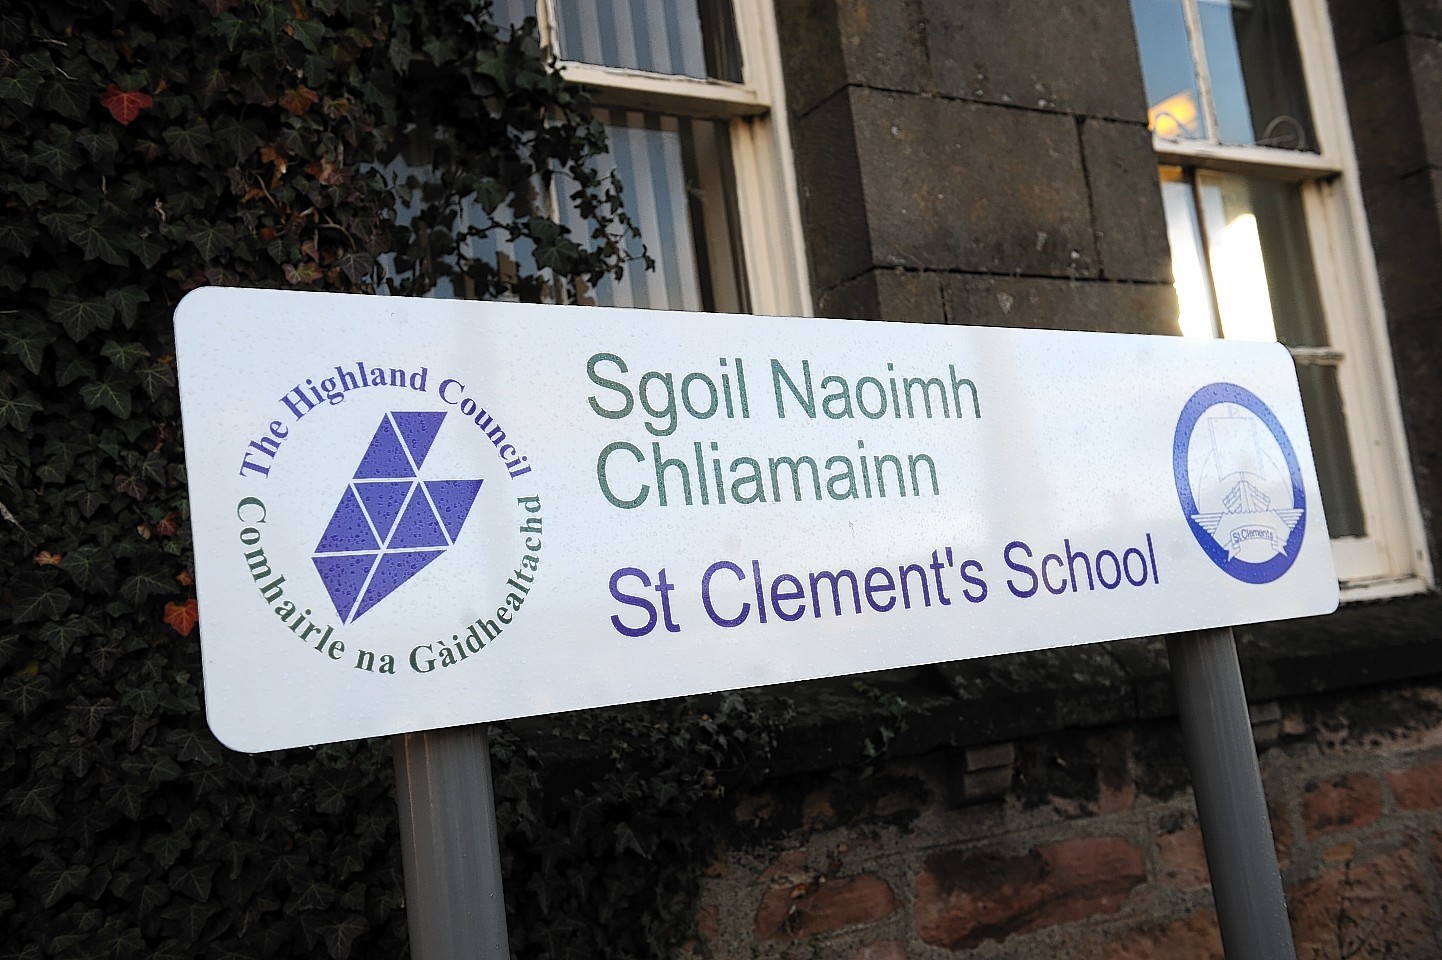 St Clement's School